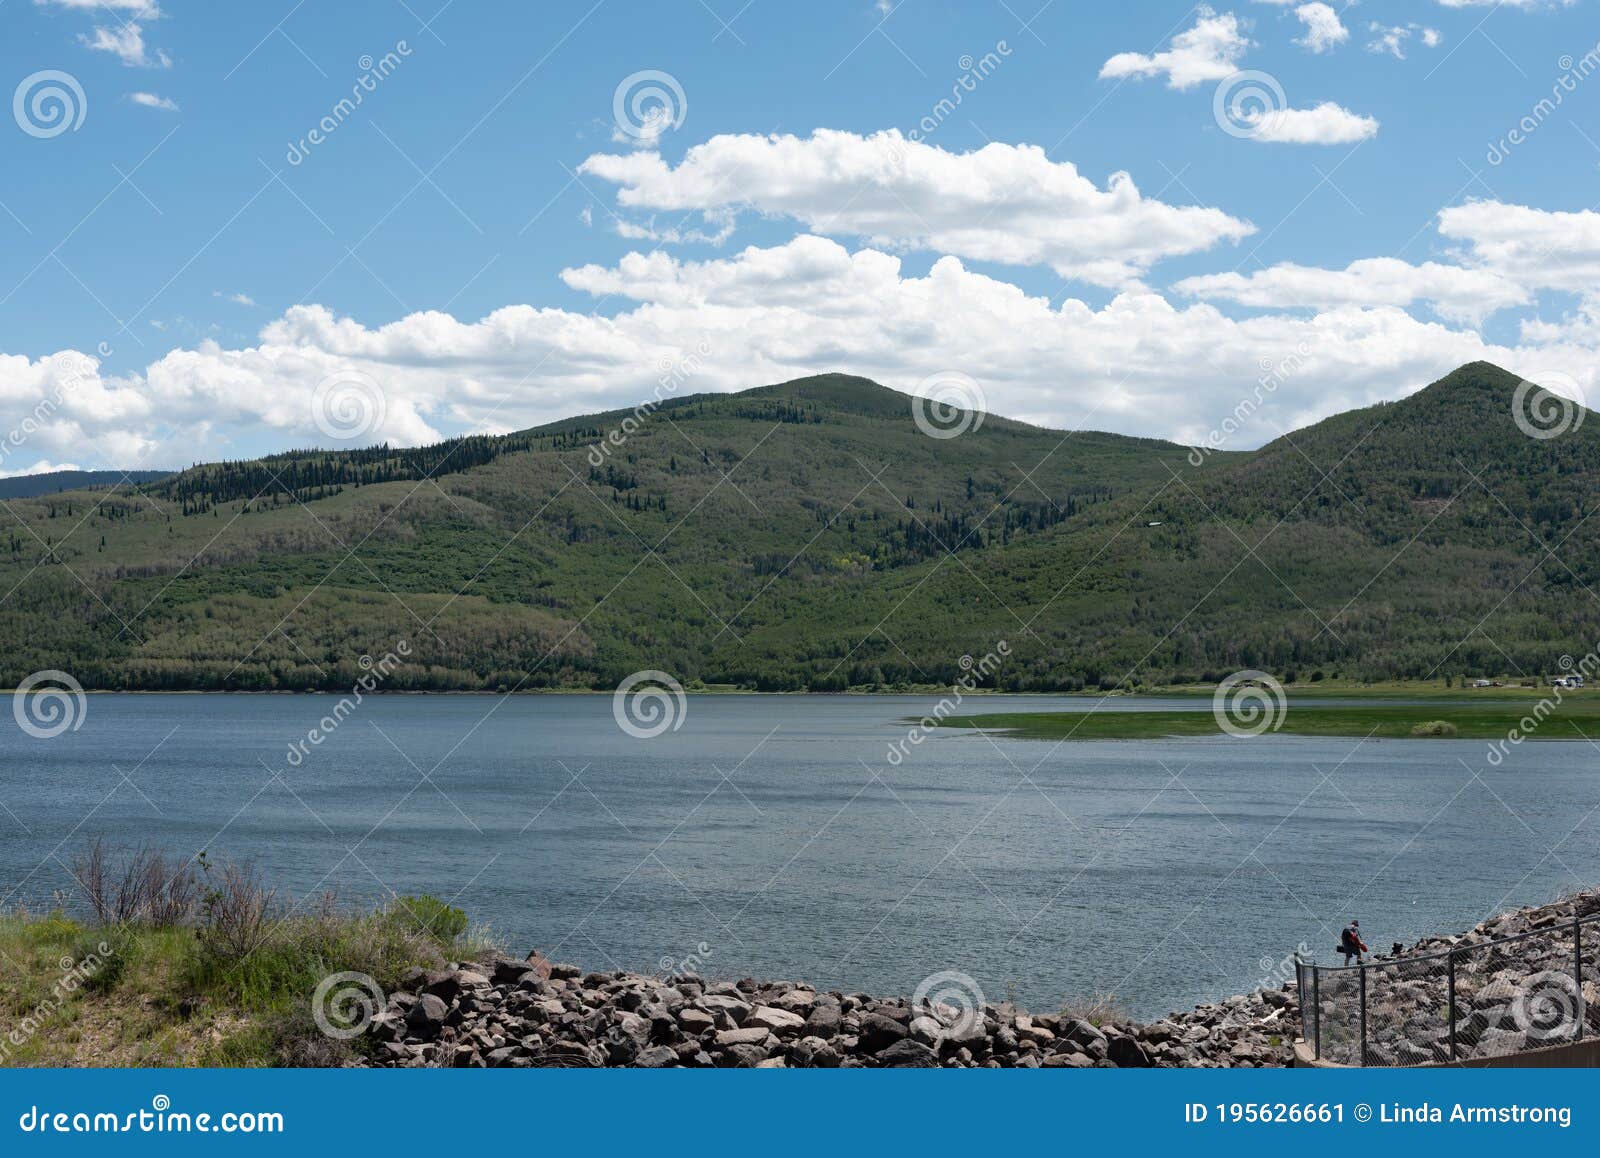 vega reservoir in western colorado